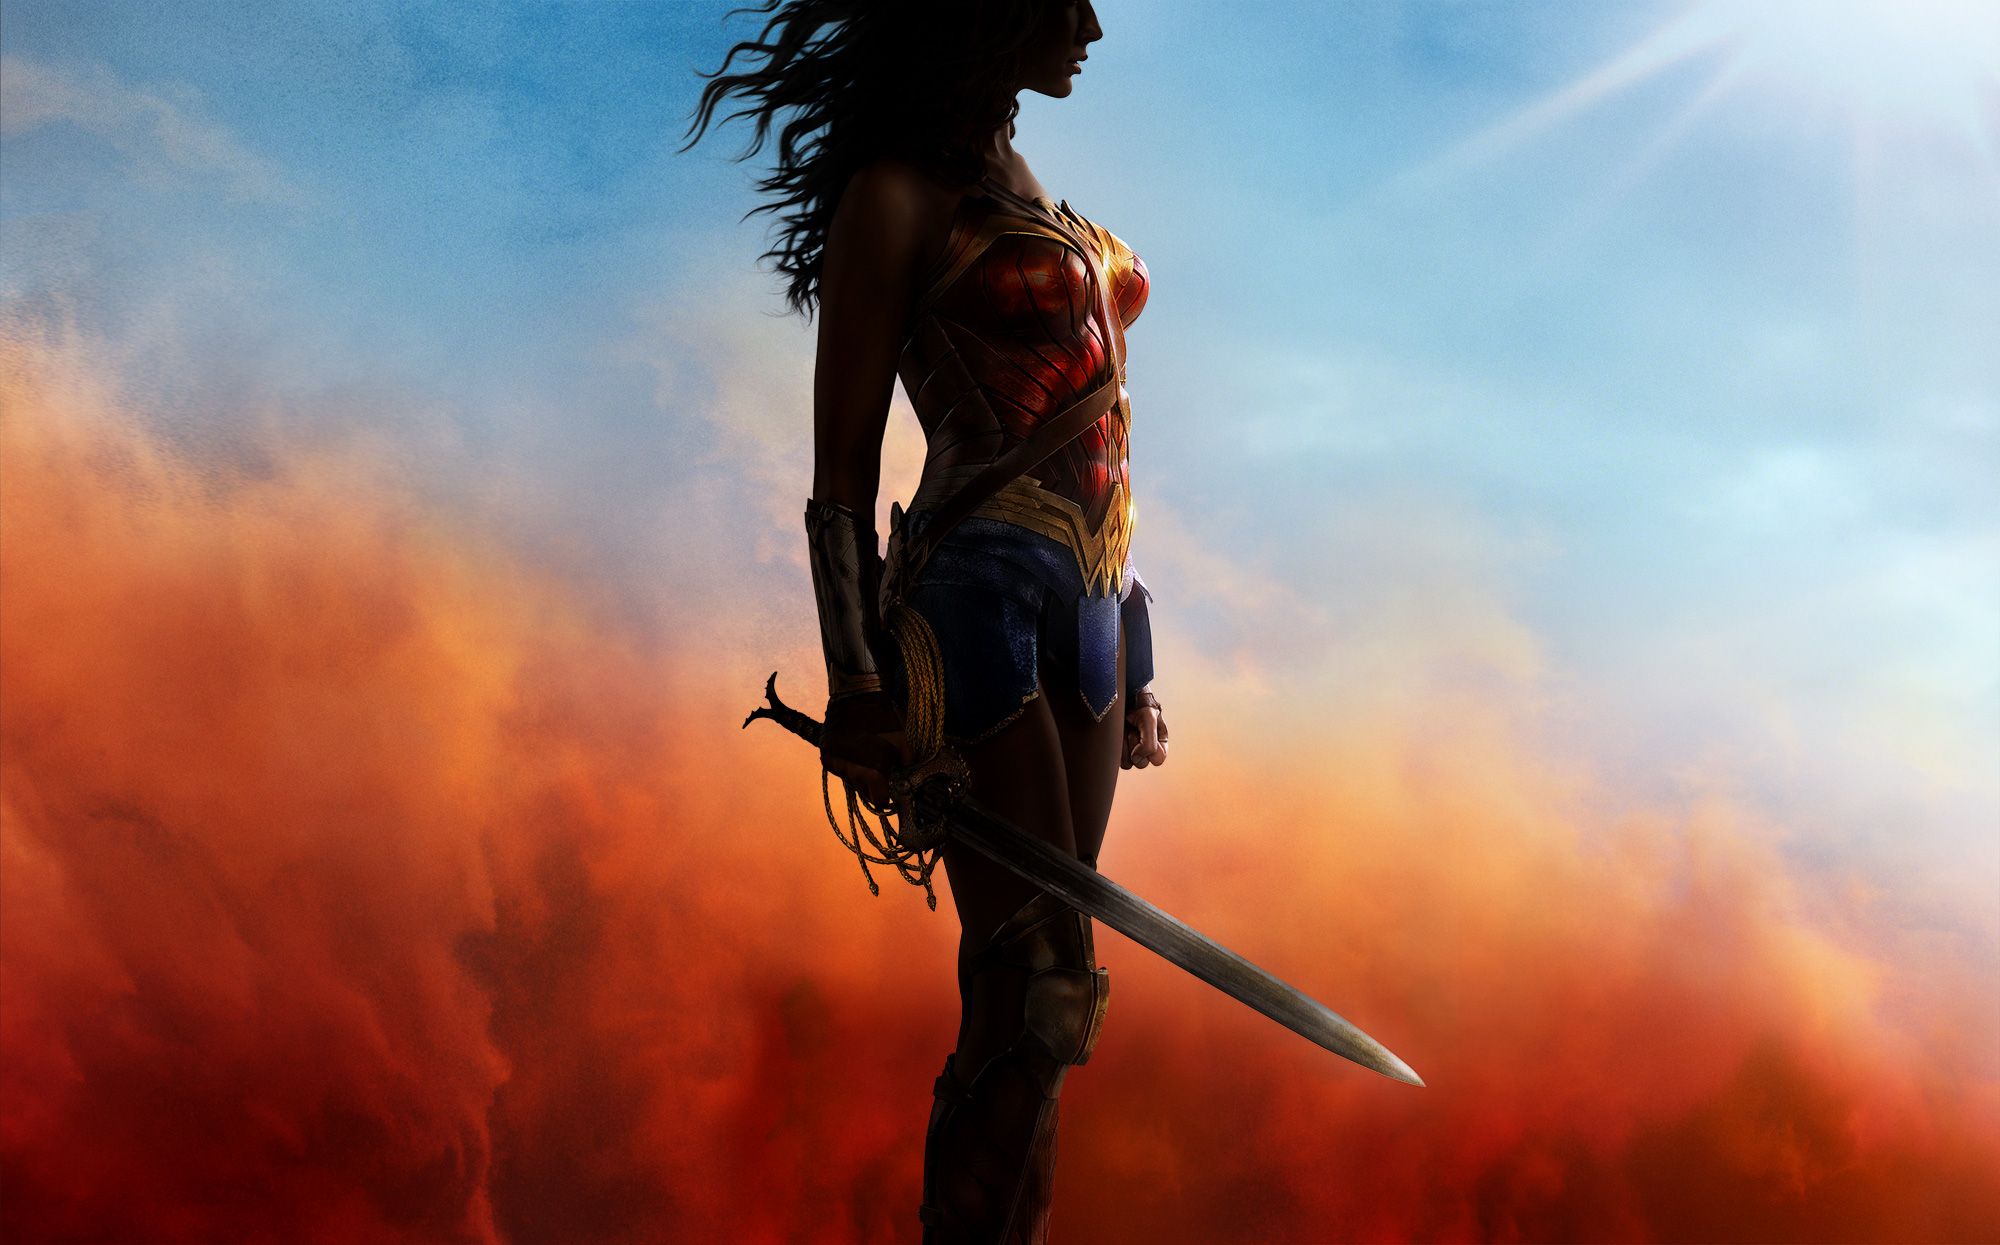 Gorgeous Wonder Woman desktop wallpaper from the official website, DC_Cinematic